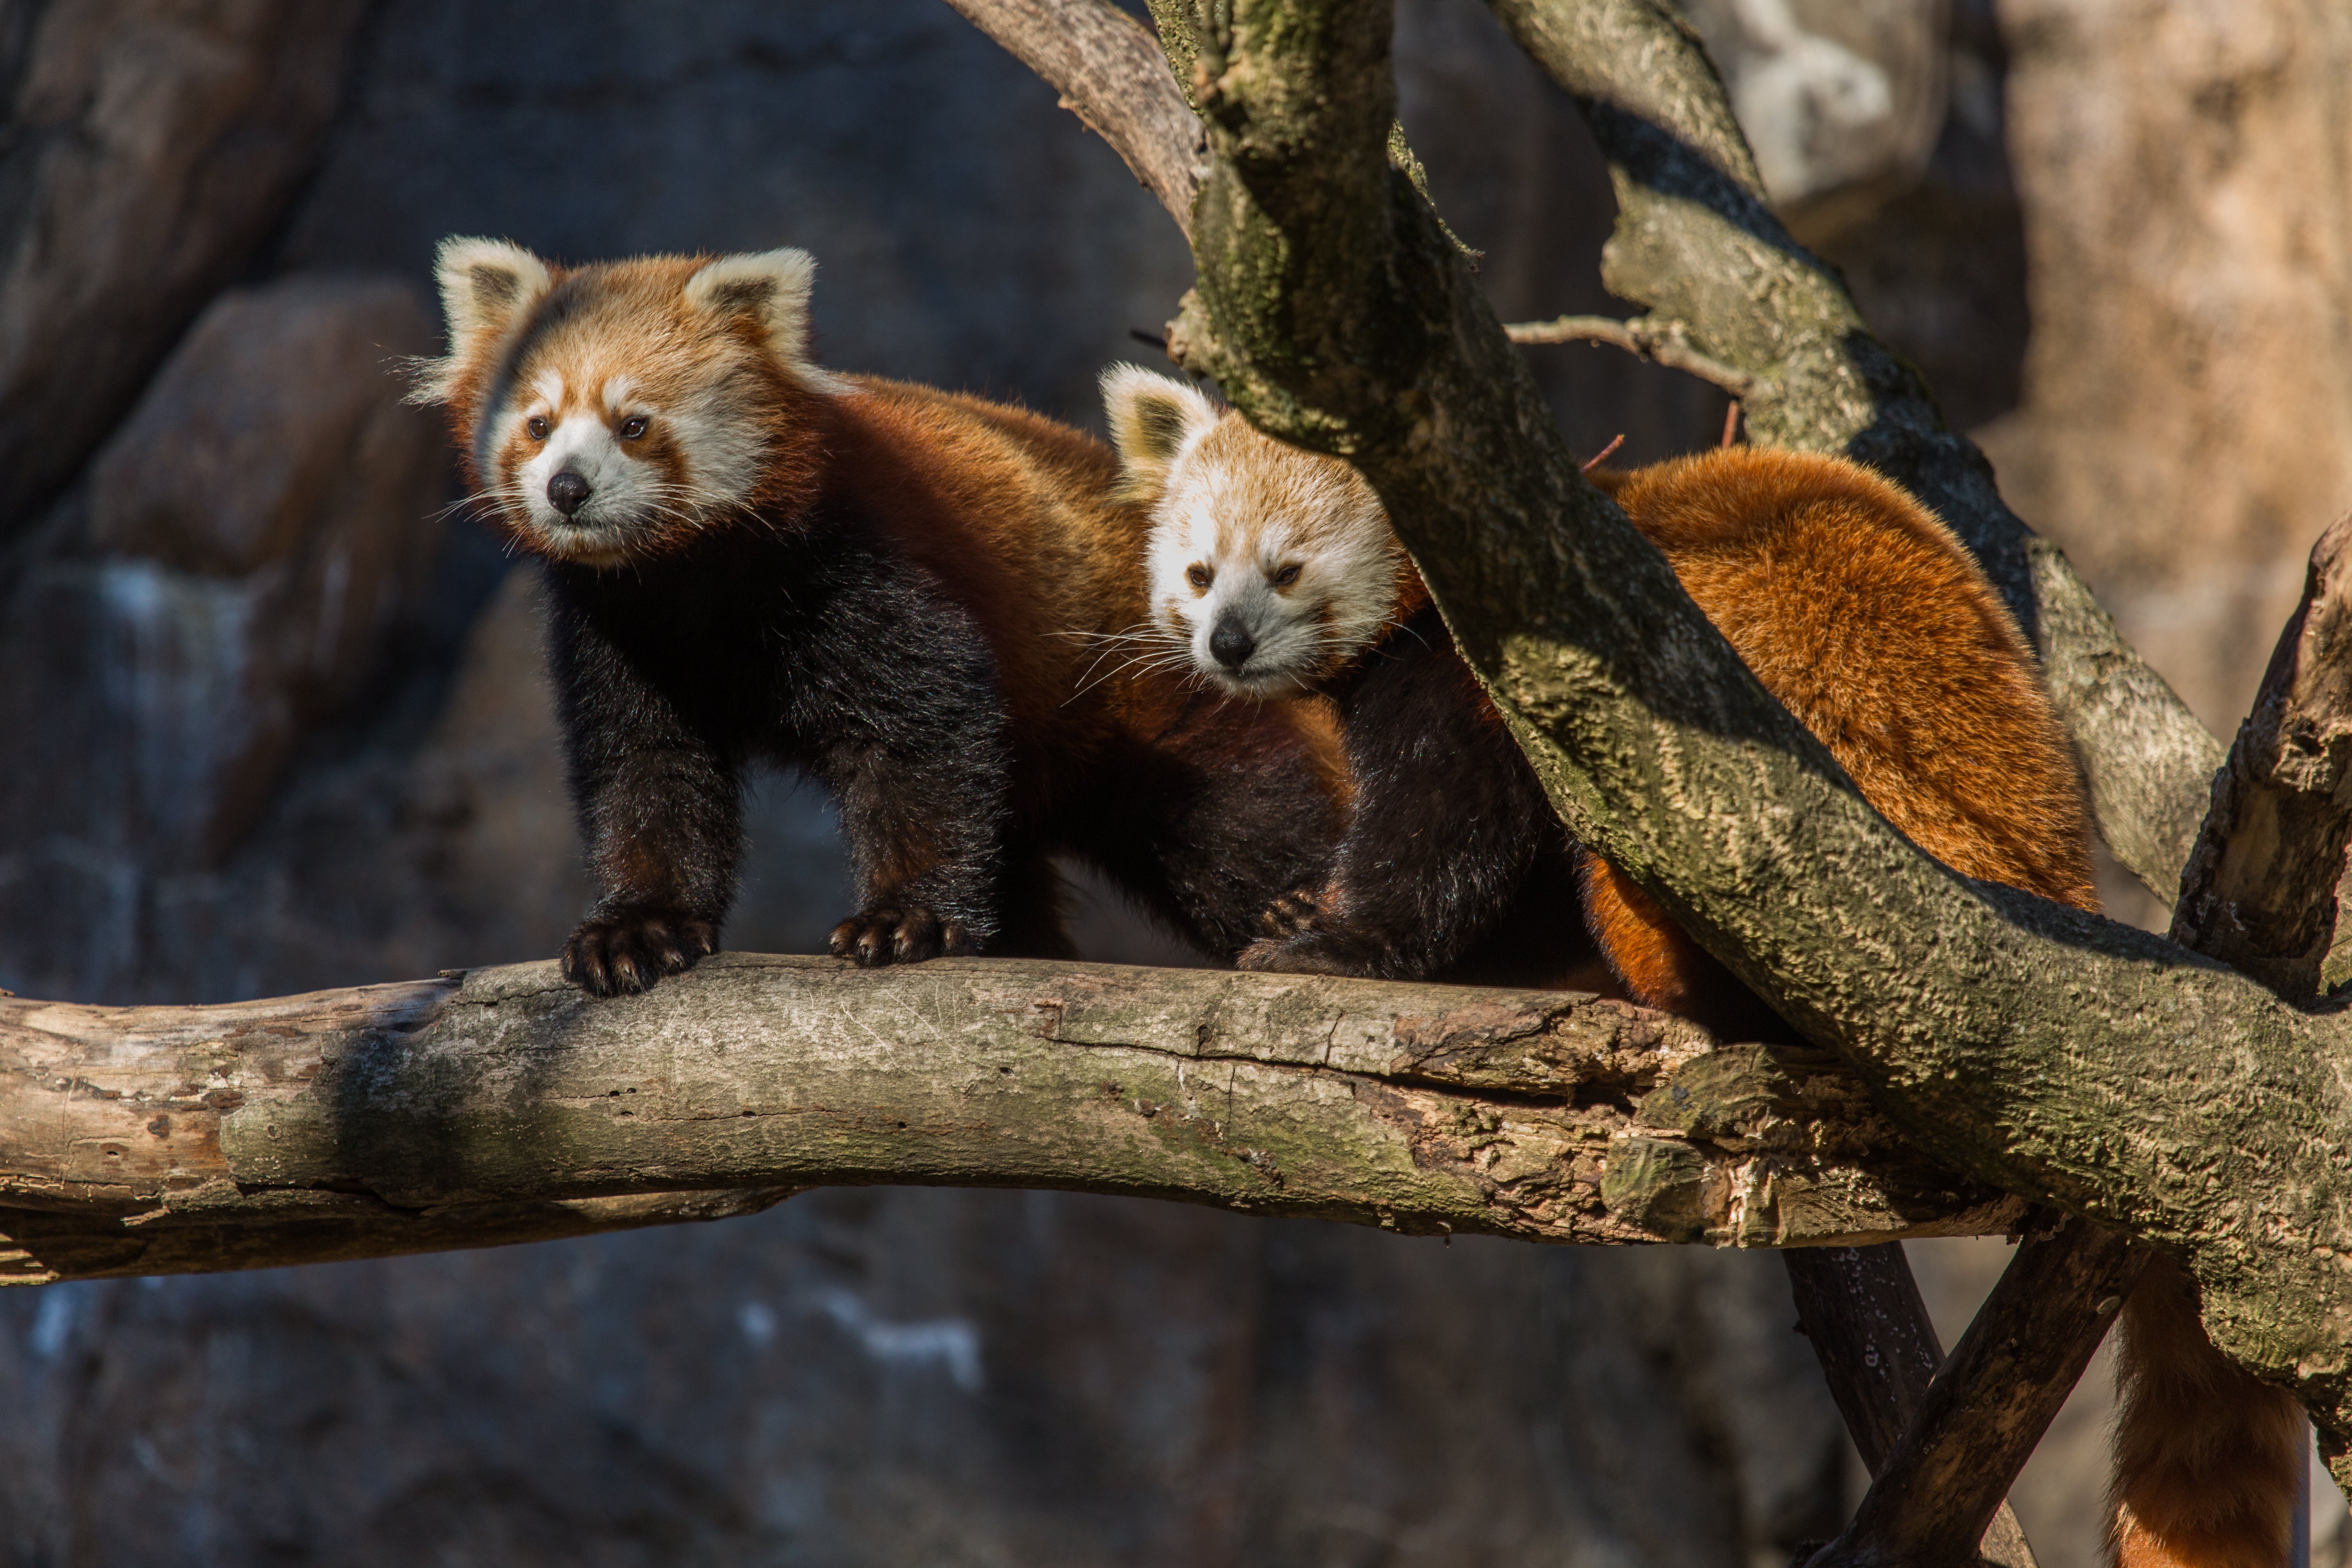 Red pandas Nutmeg and jackie